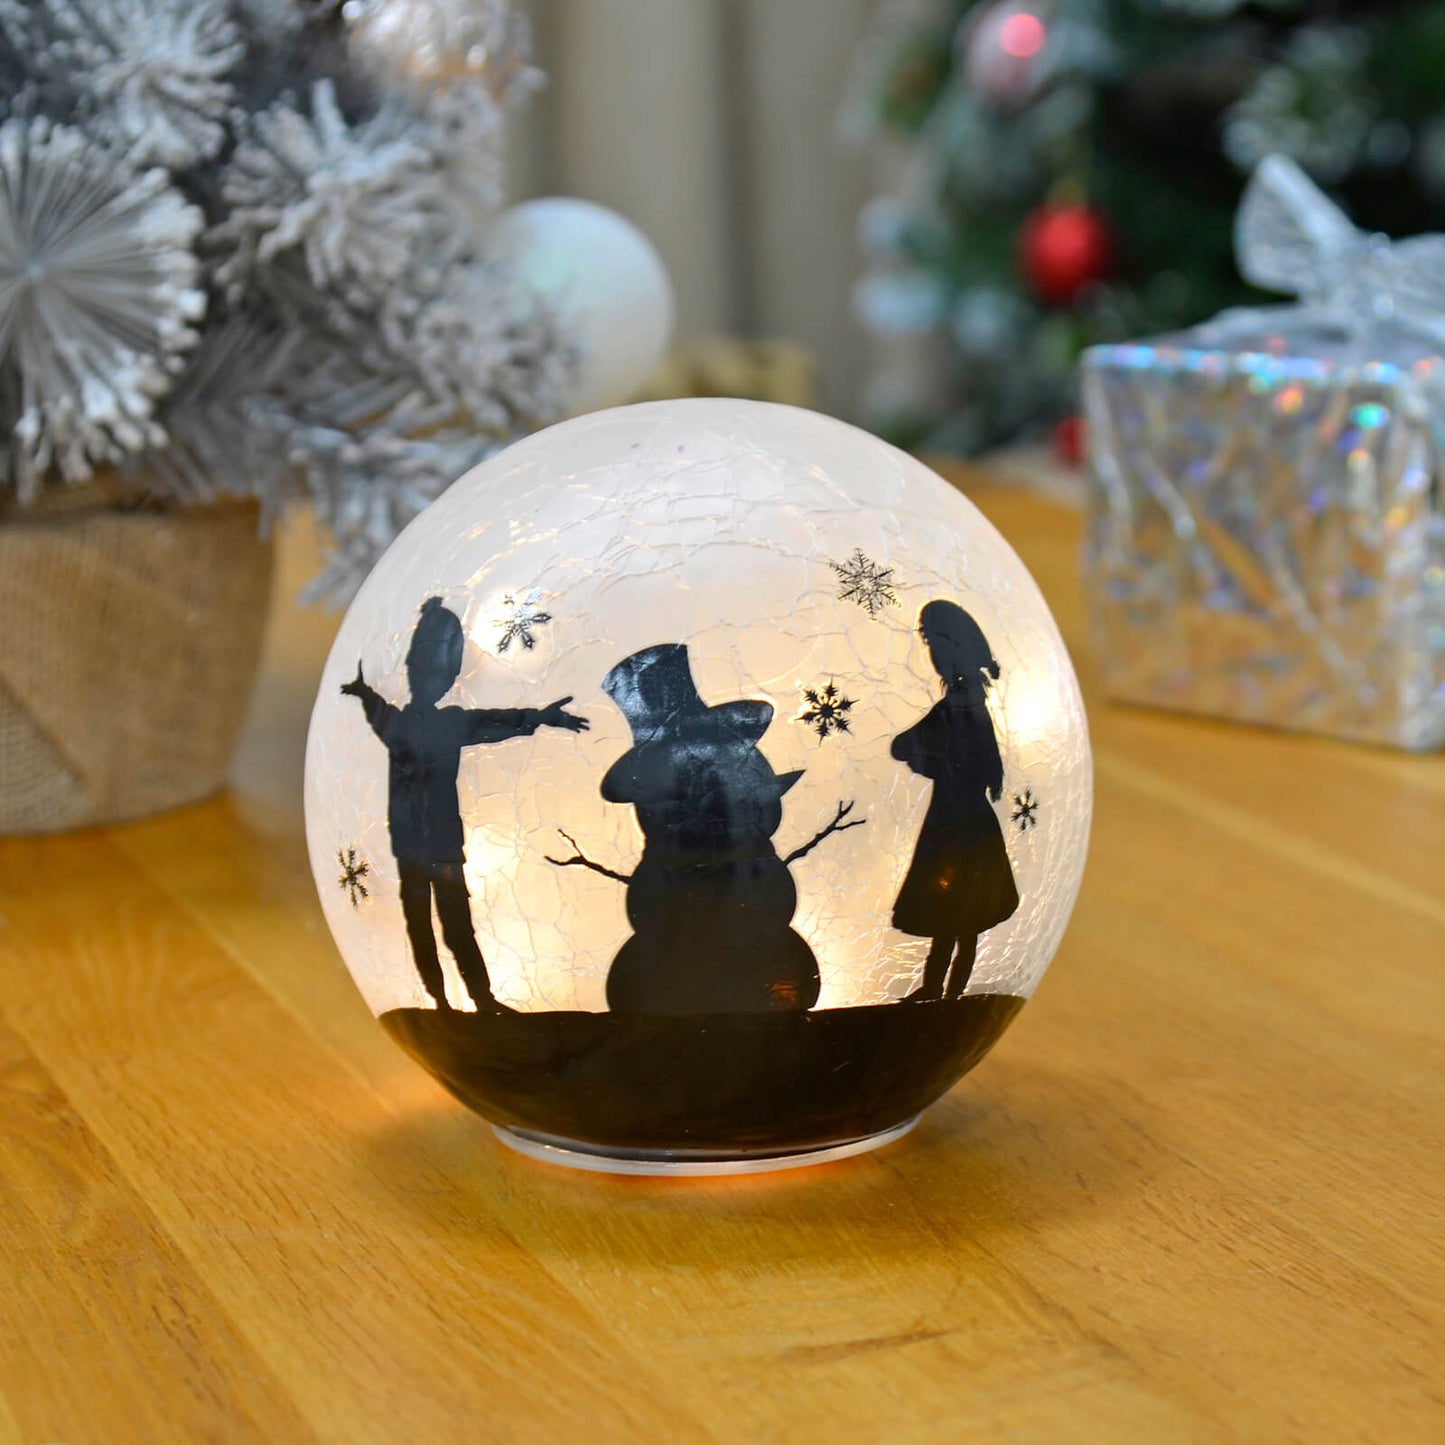 Mr Crimbo Light Up Christmas Crackle Ball Decoration LED 15cm - MrCrimbo.co.uk -XS7296 - Snowman & Kids -ball